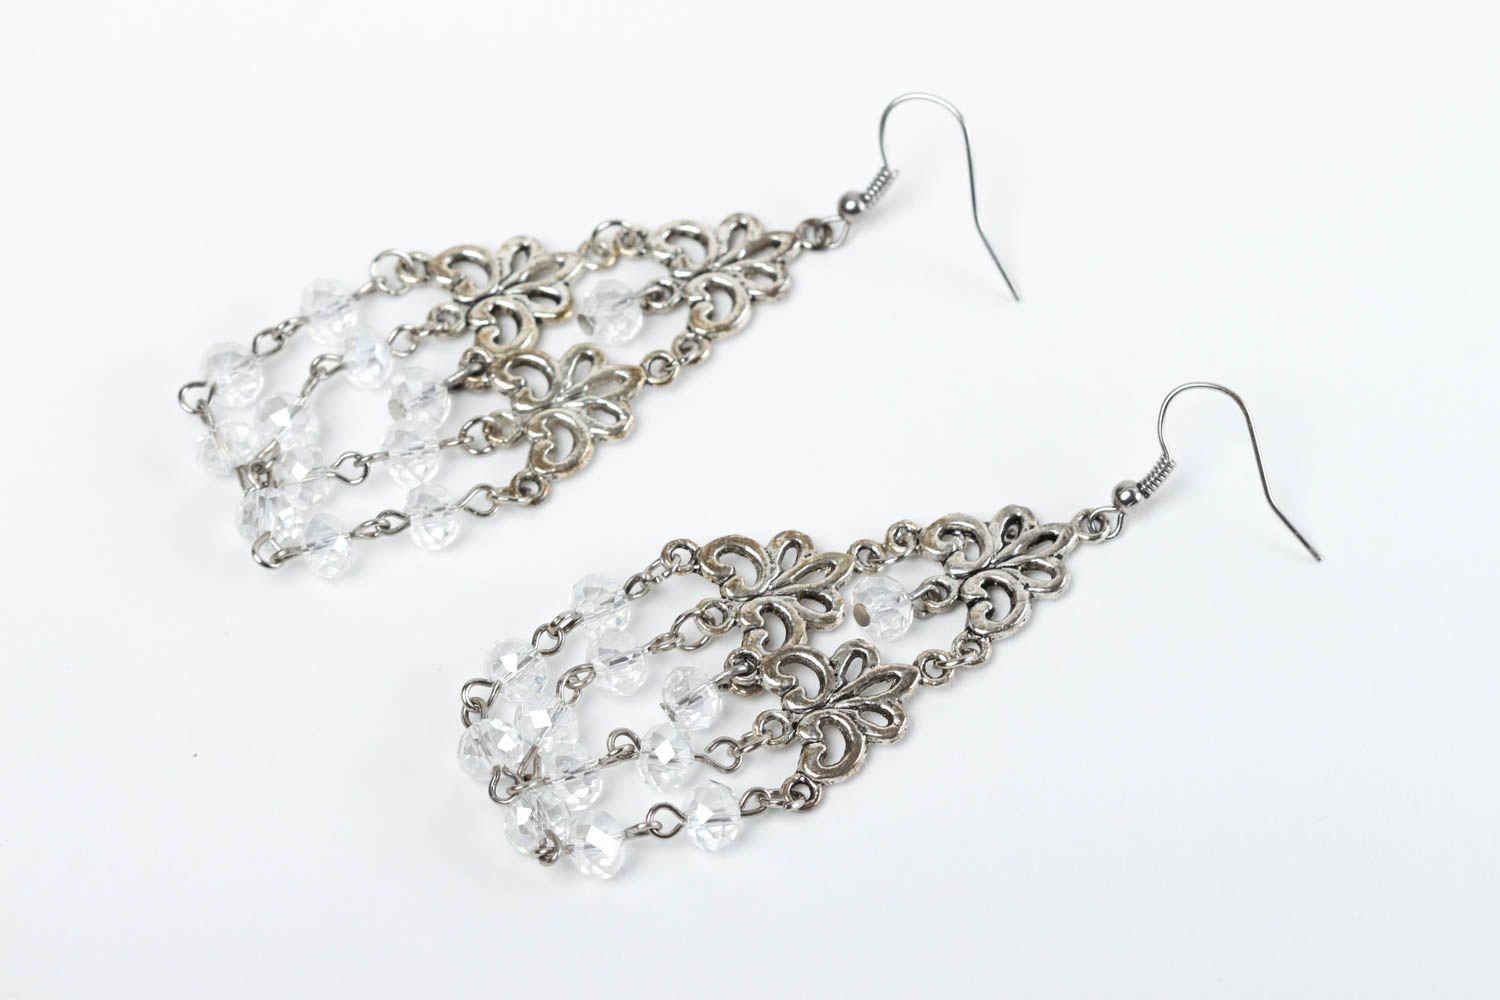 Handmade earrings crystal jewelry designer accessories stylish earrings photo 2